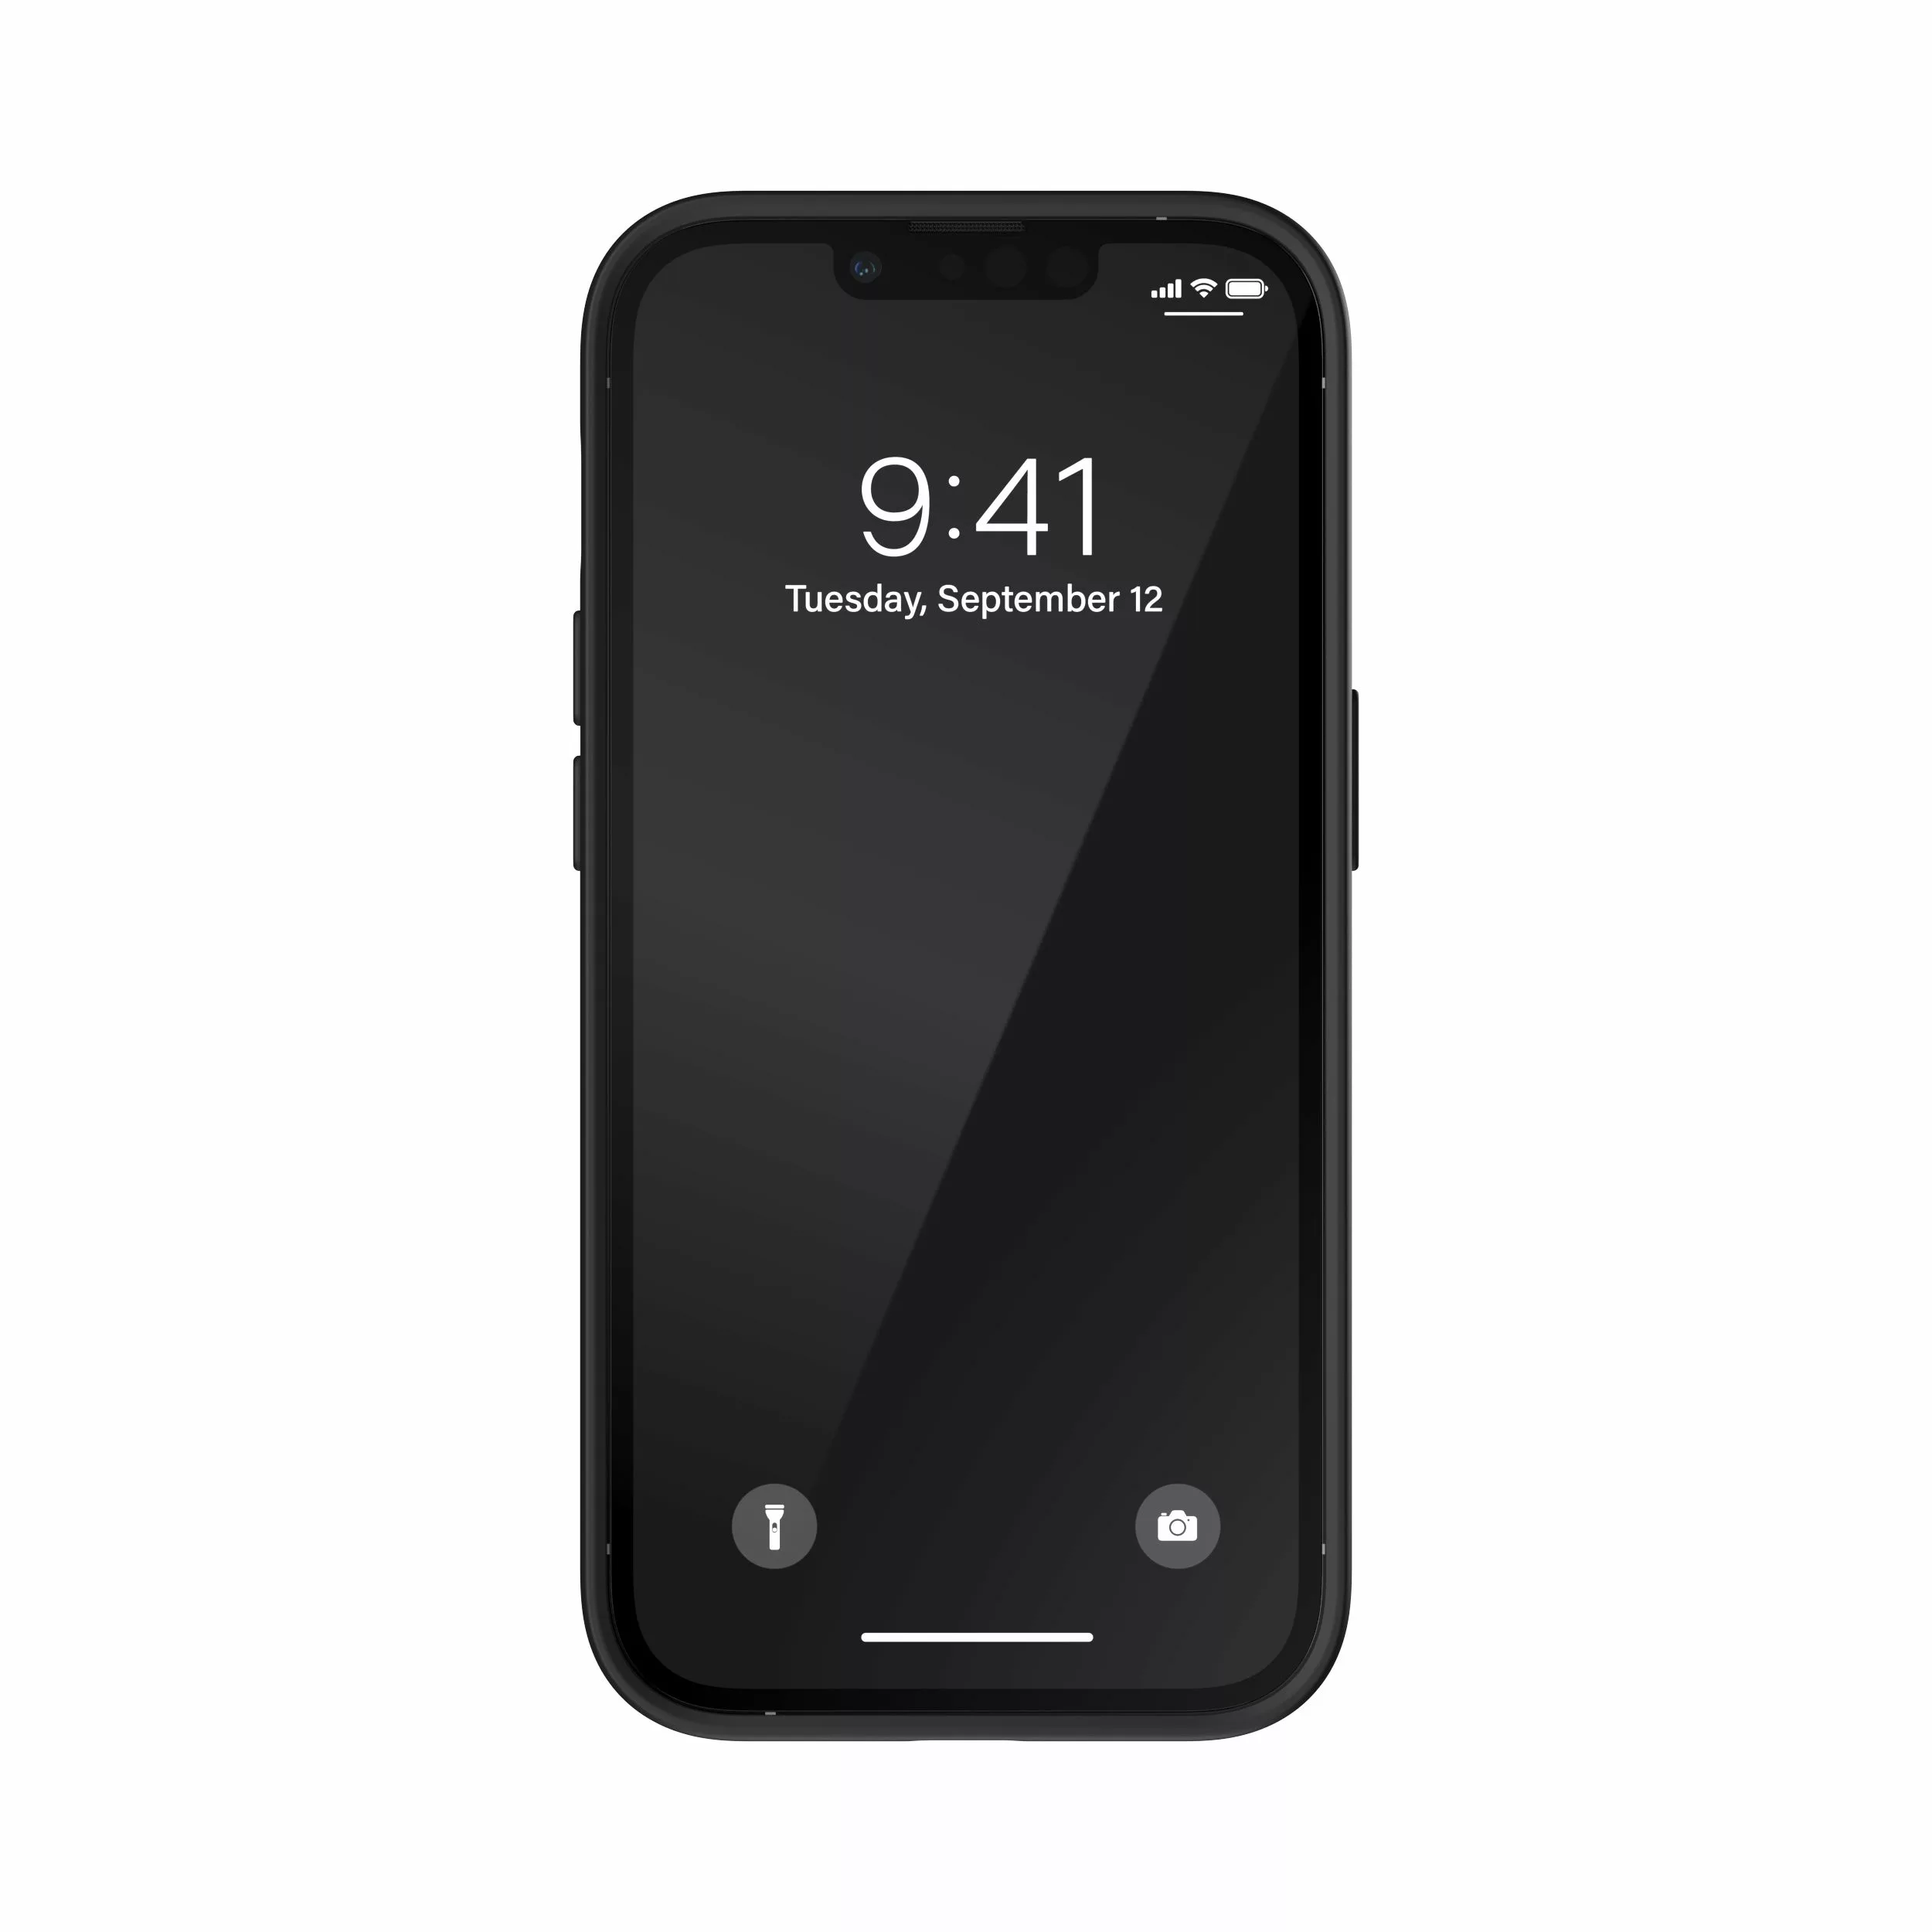 Diesel รุ่น Moulded Case Core - เคส iPhone 14 Pro - สี Black/White